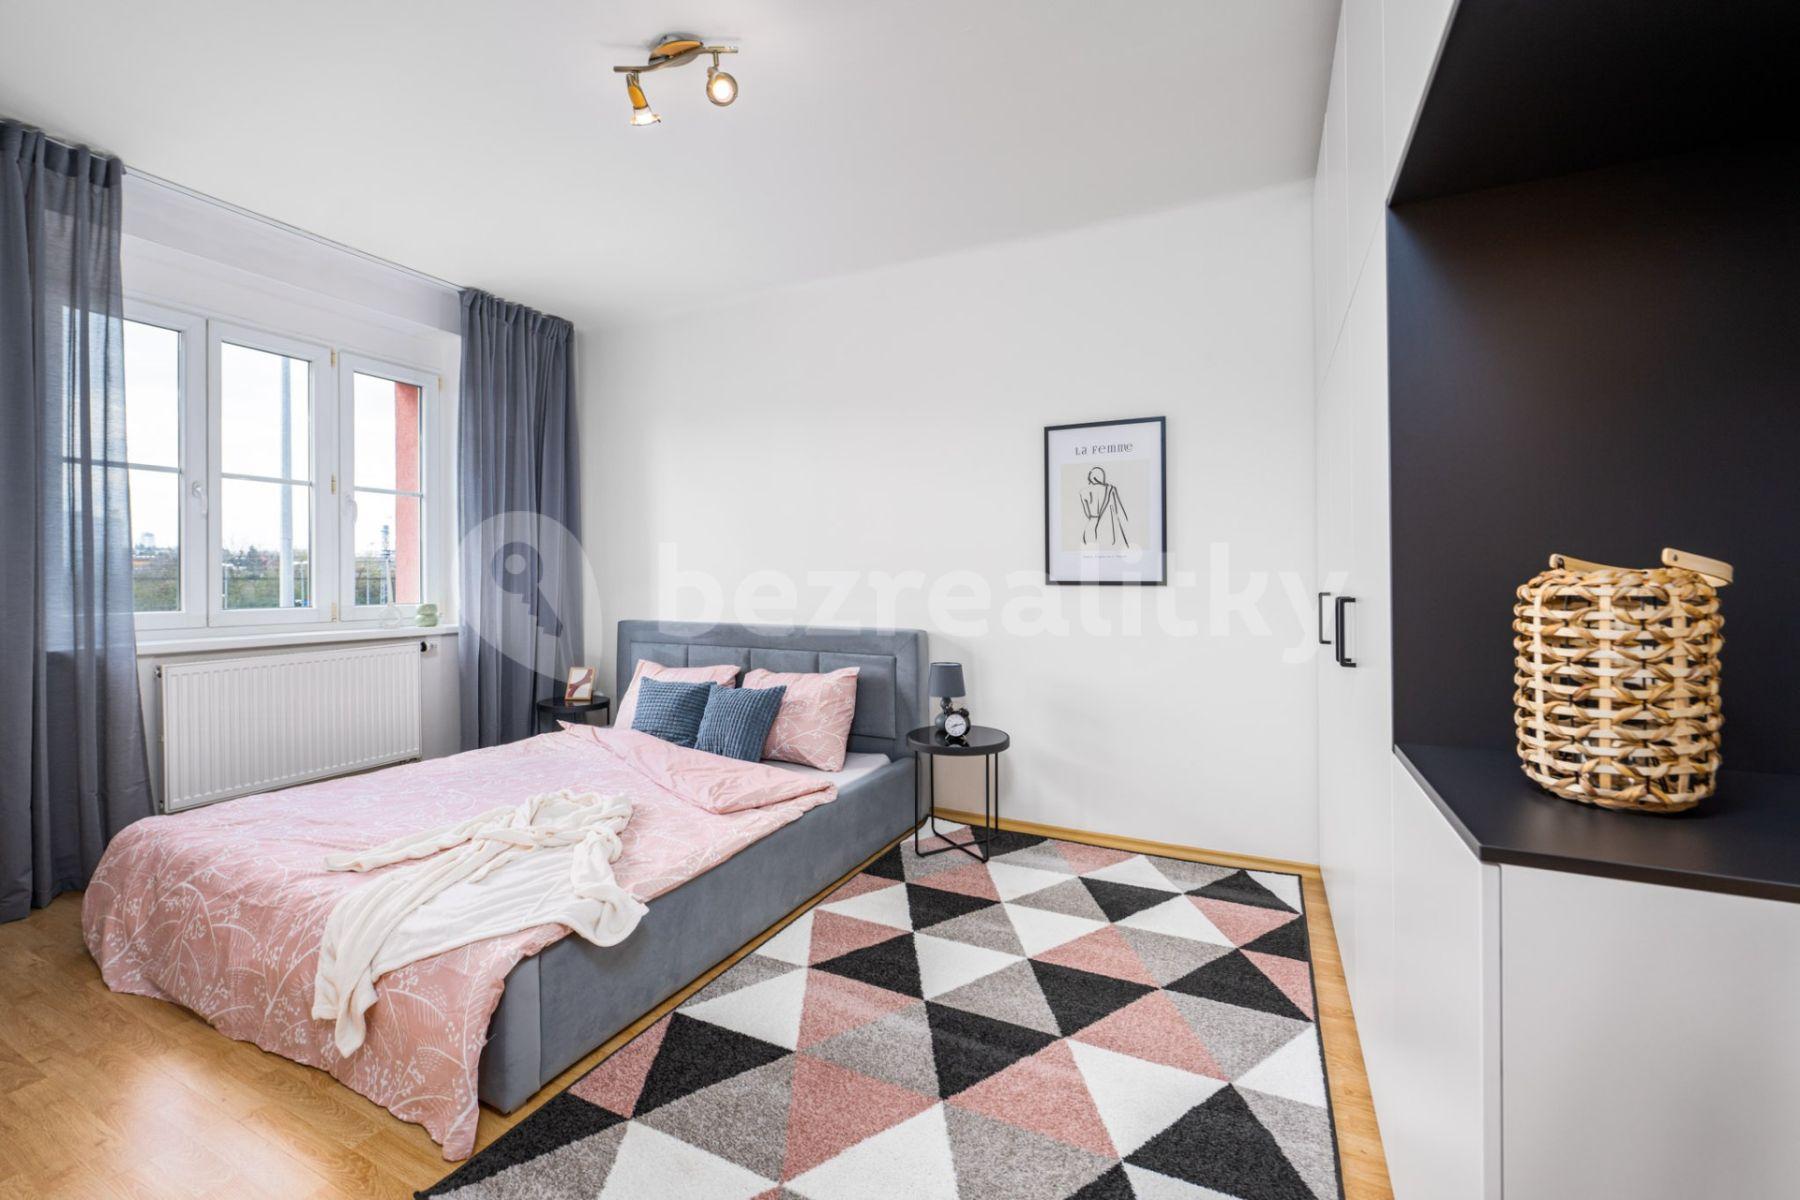 2 bedroom flat for sale, 69 m², U Pekáren, Prague, Prague